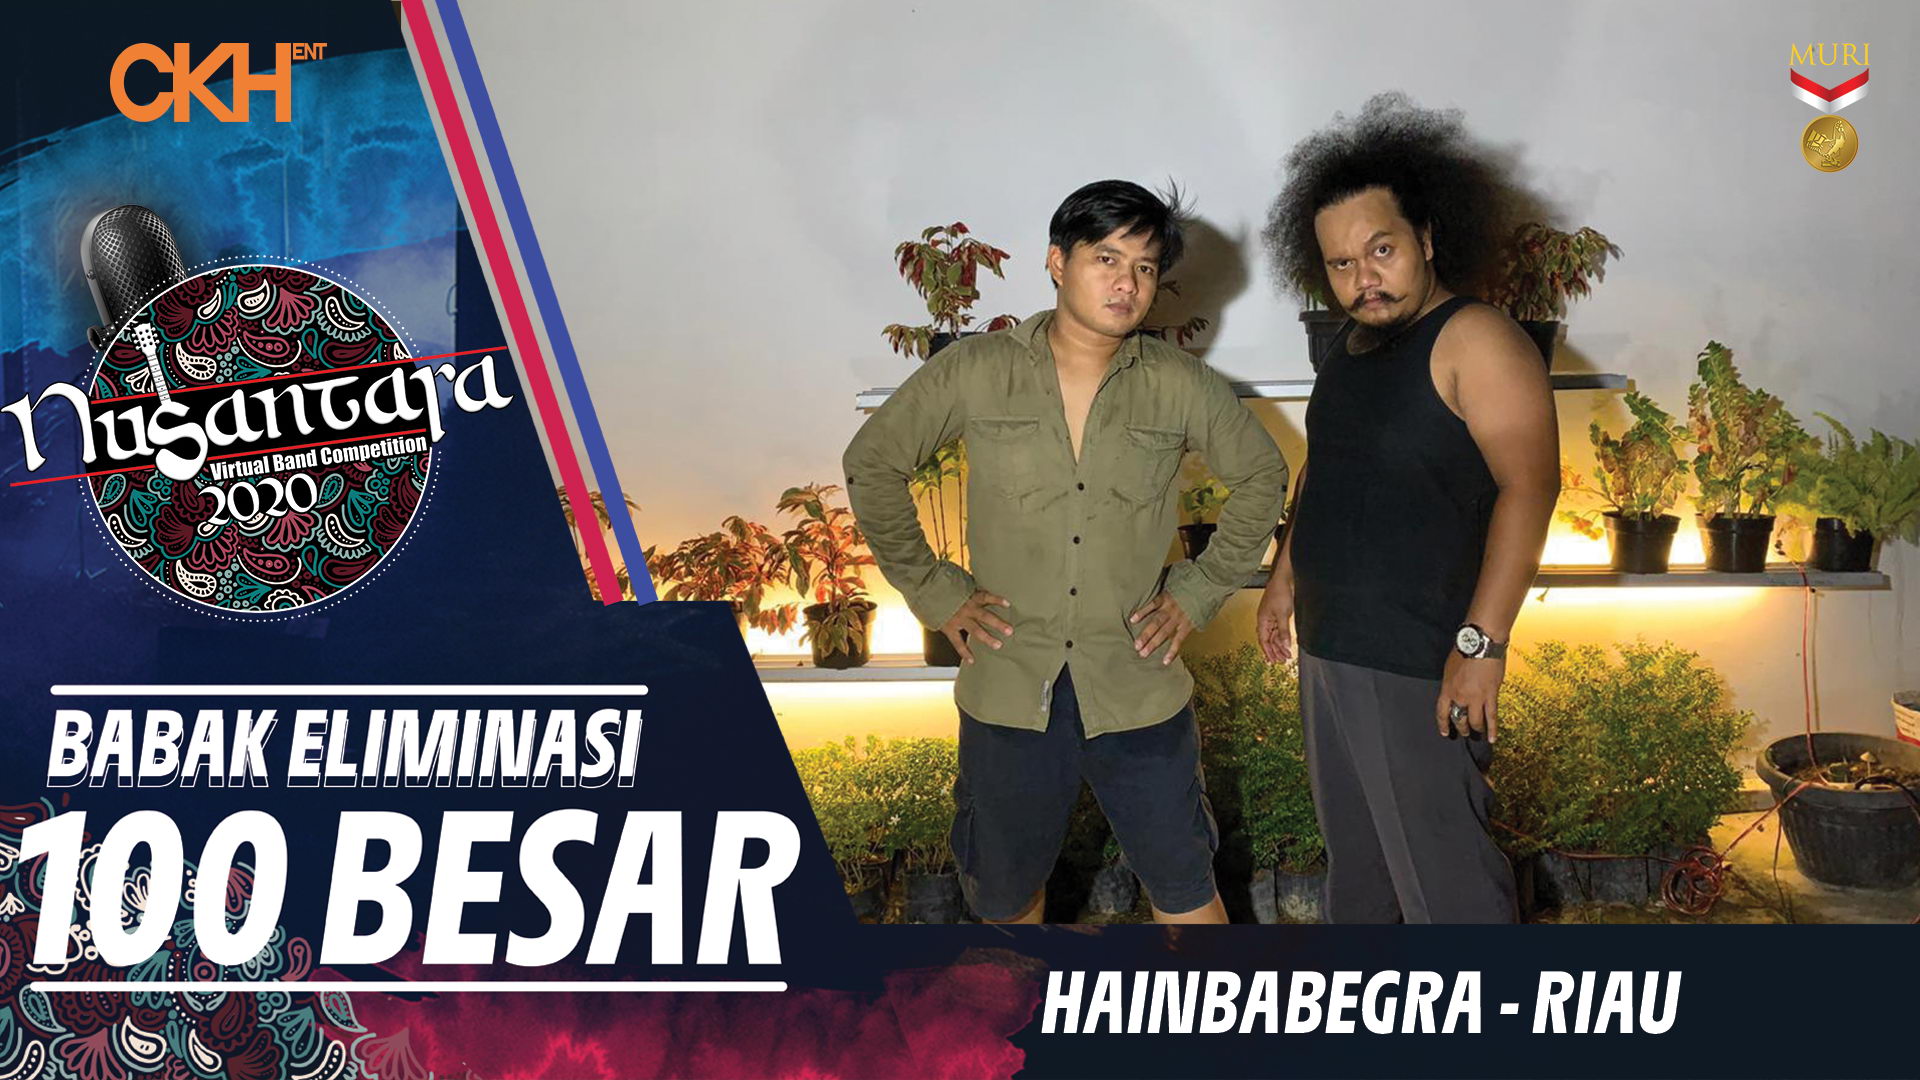 Hainbabegra - Eliminasi 100 Besar Nusantara Virtual Band Competition